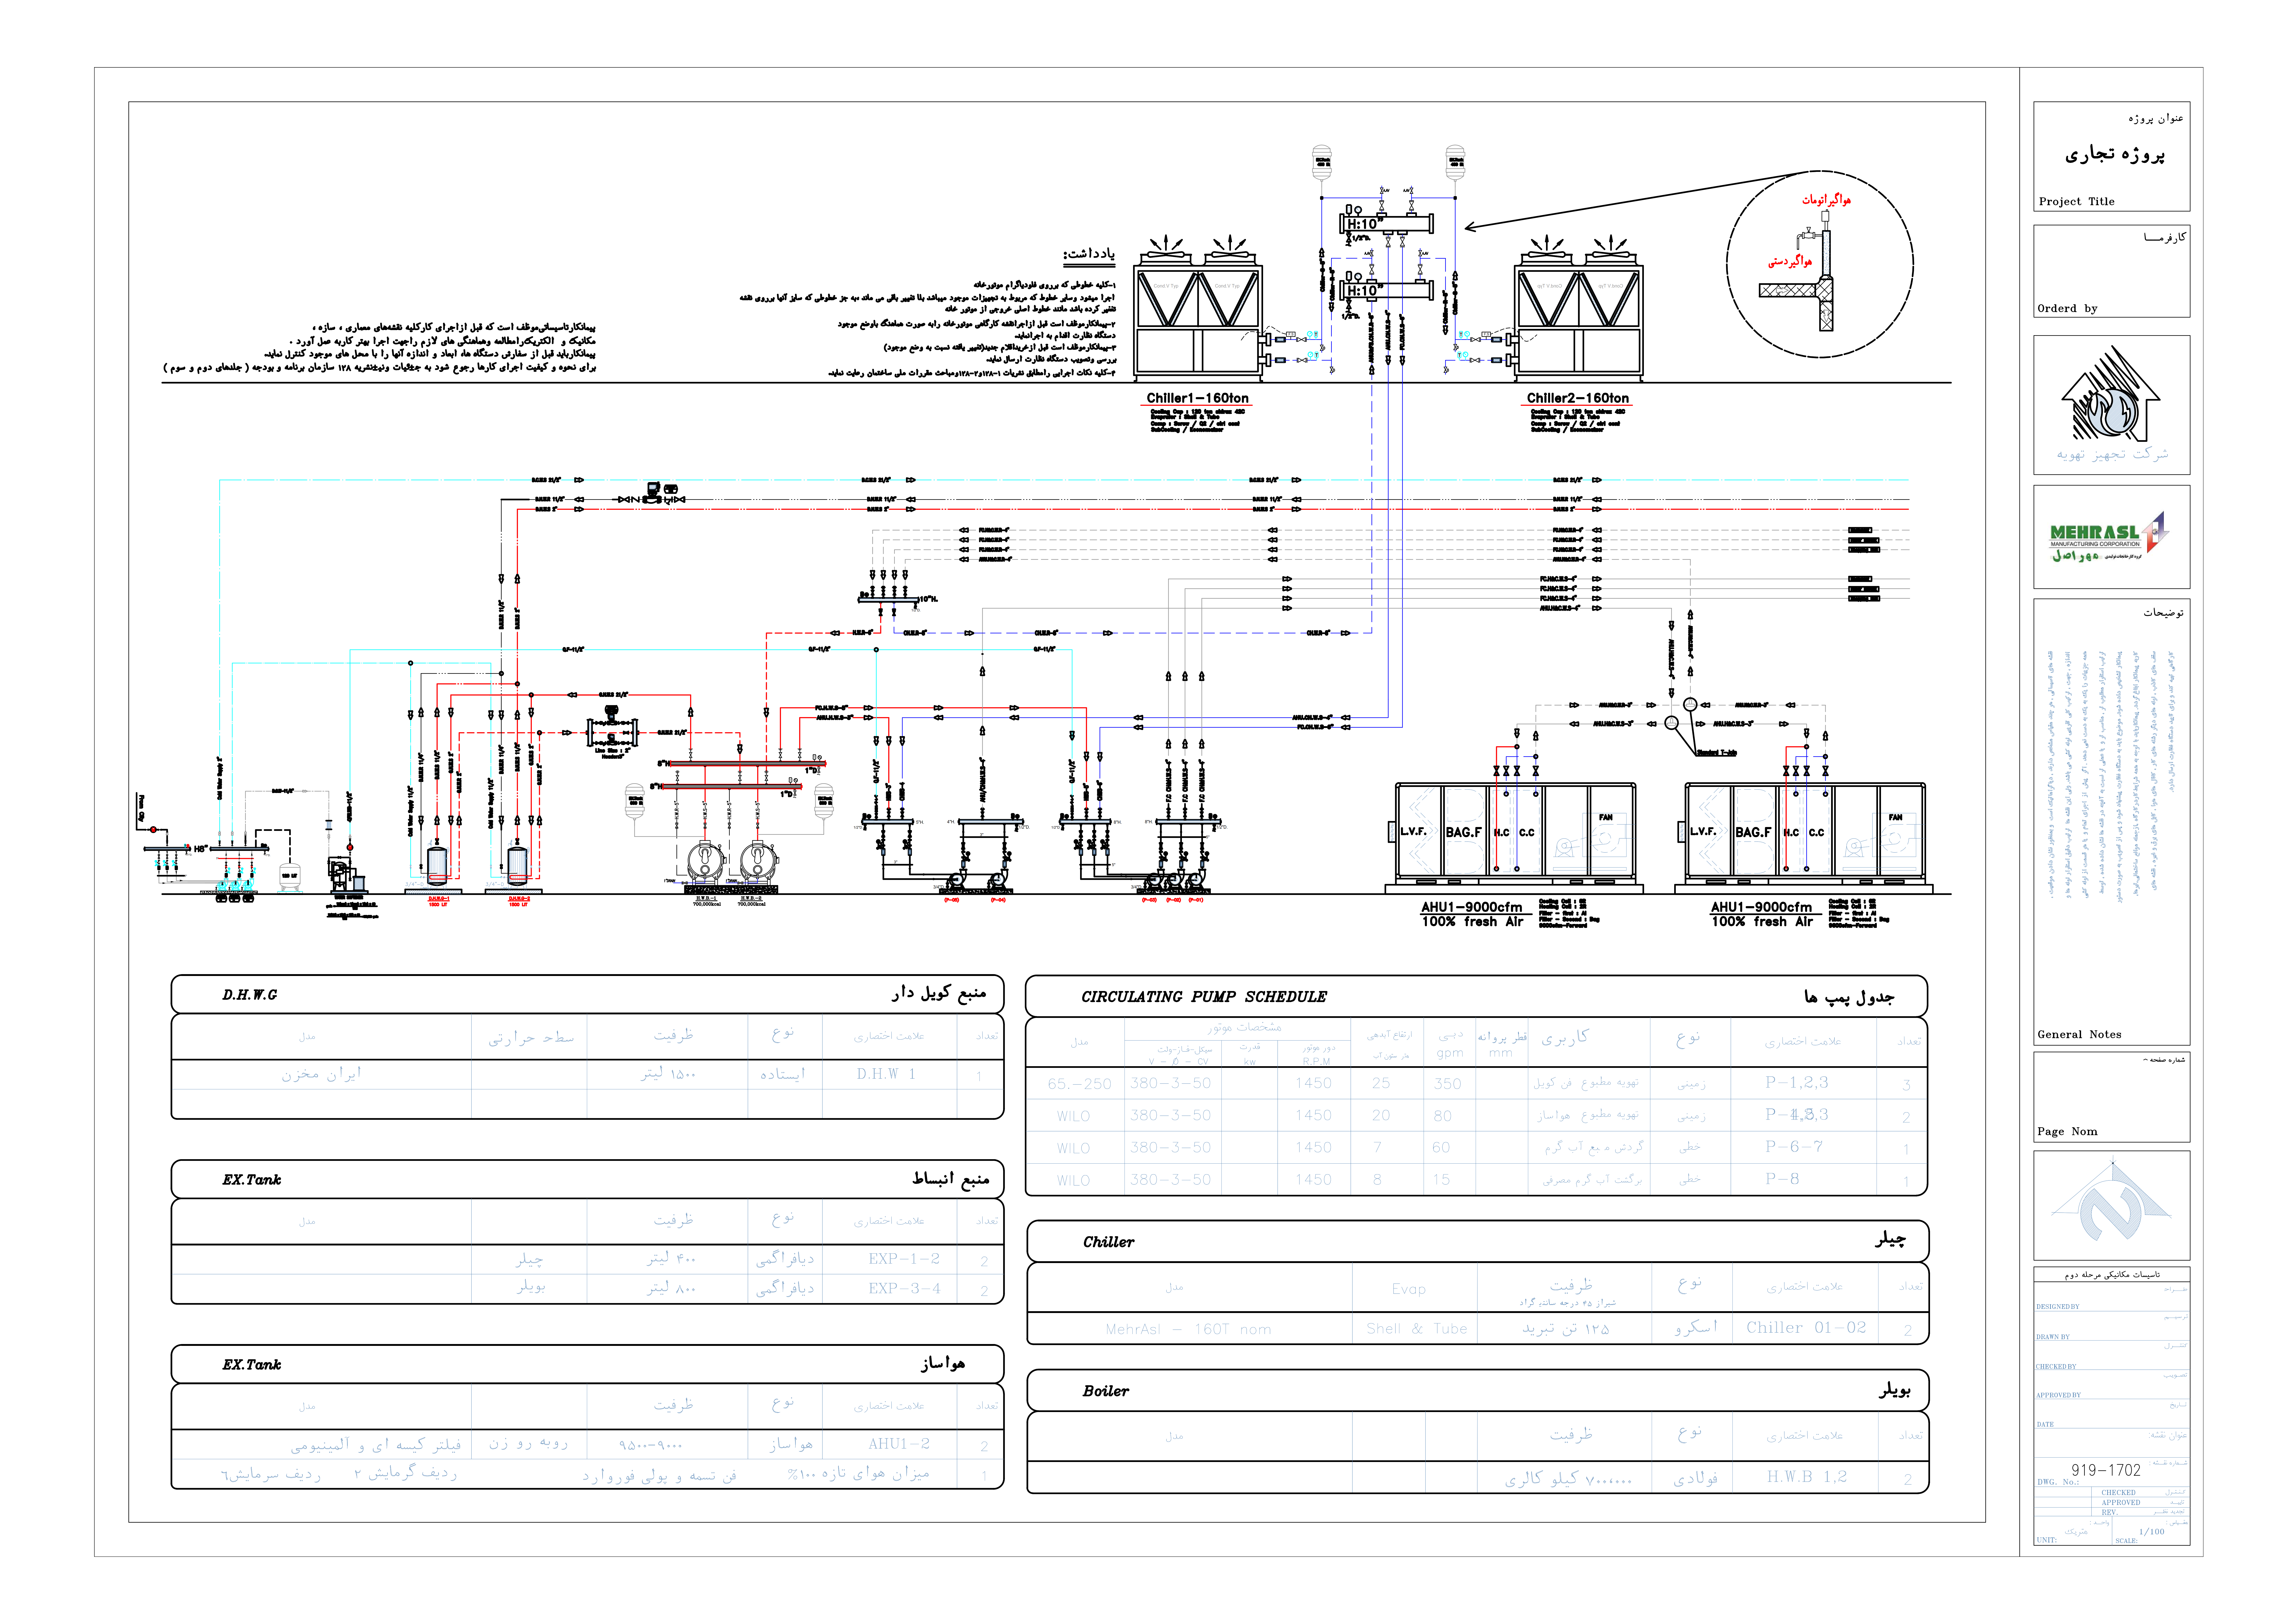 Designe and calculate full HVAC system | 2021 |Mall Project | Shiraz